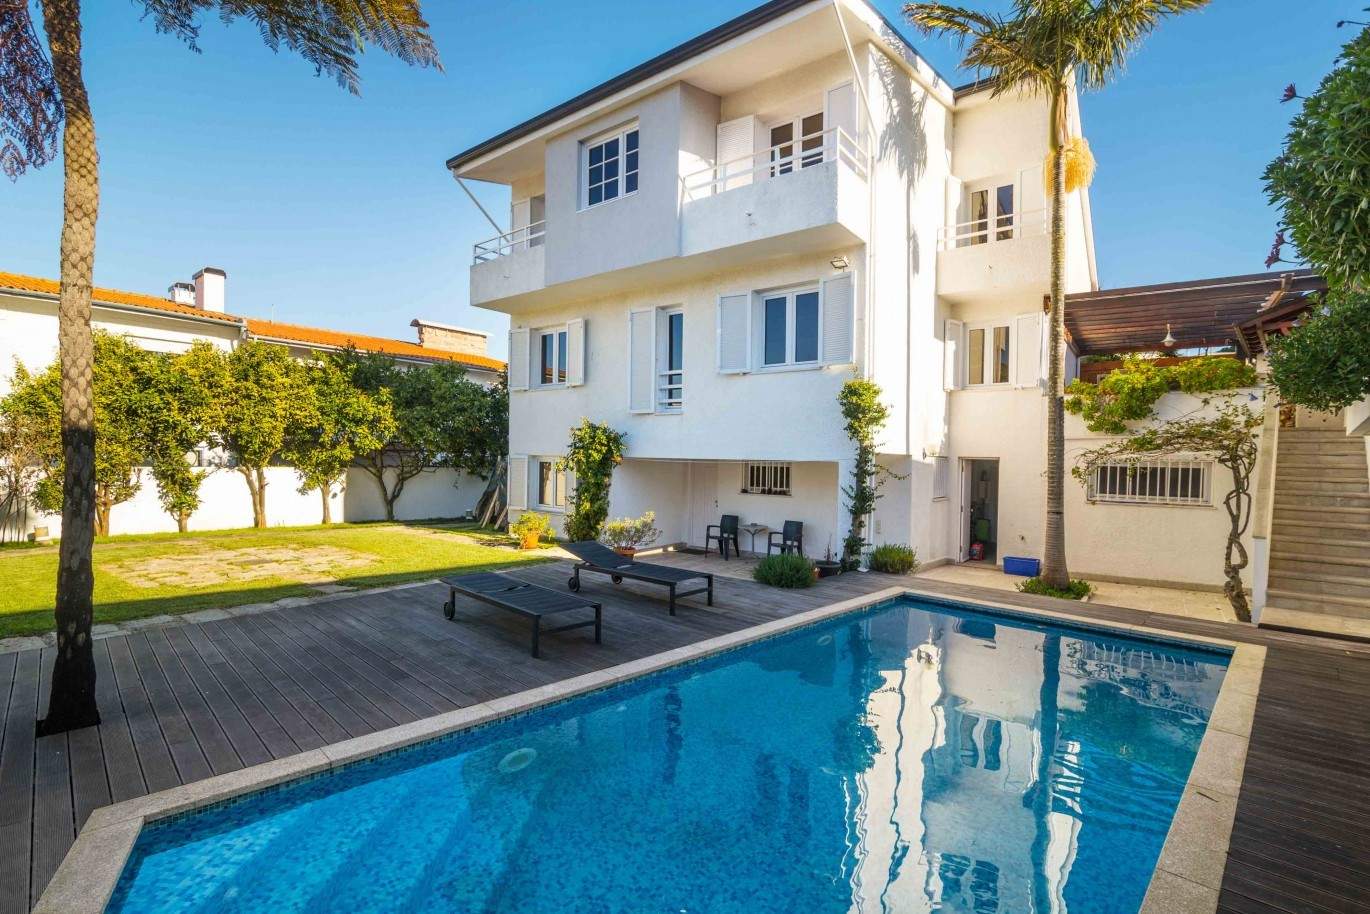 Villa para venta con piscina, Senhora da Hora, Porto, Portugal_94455